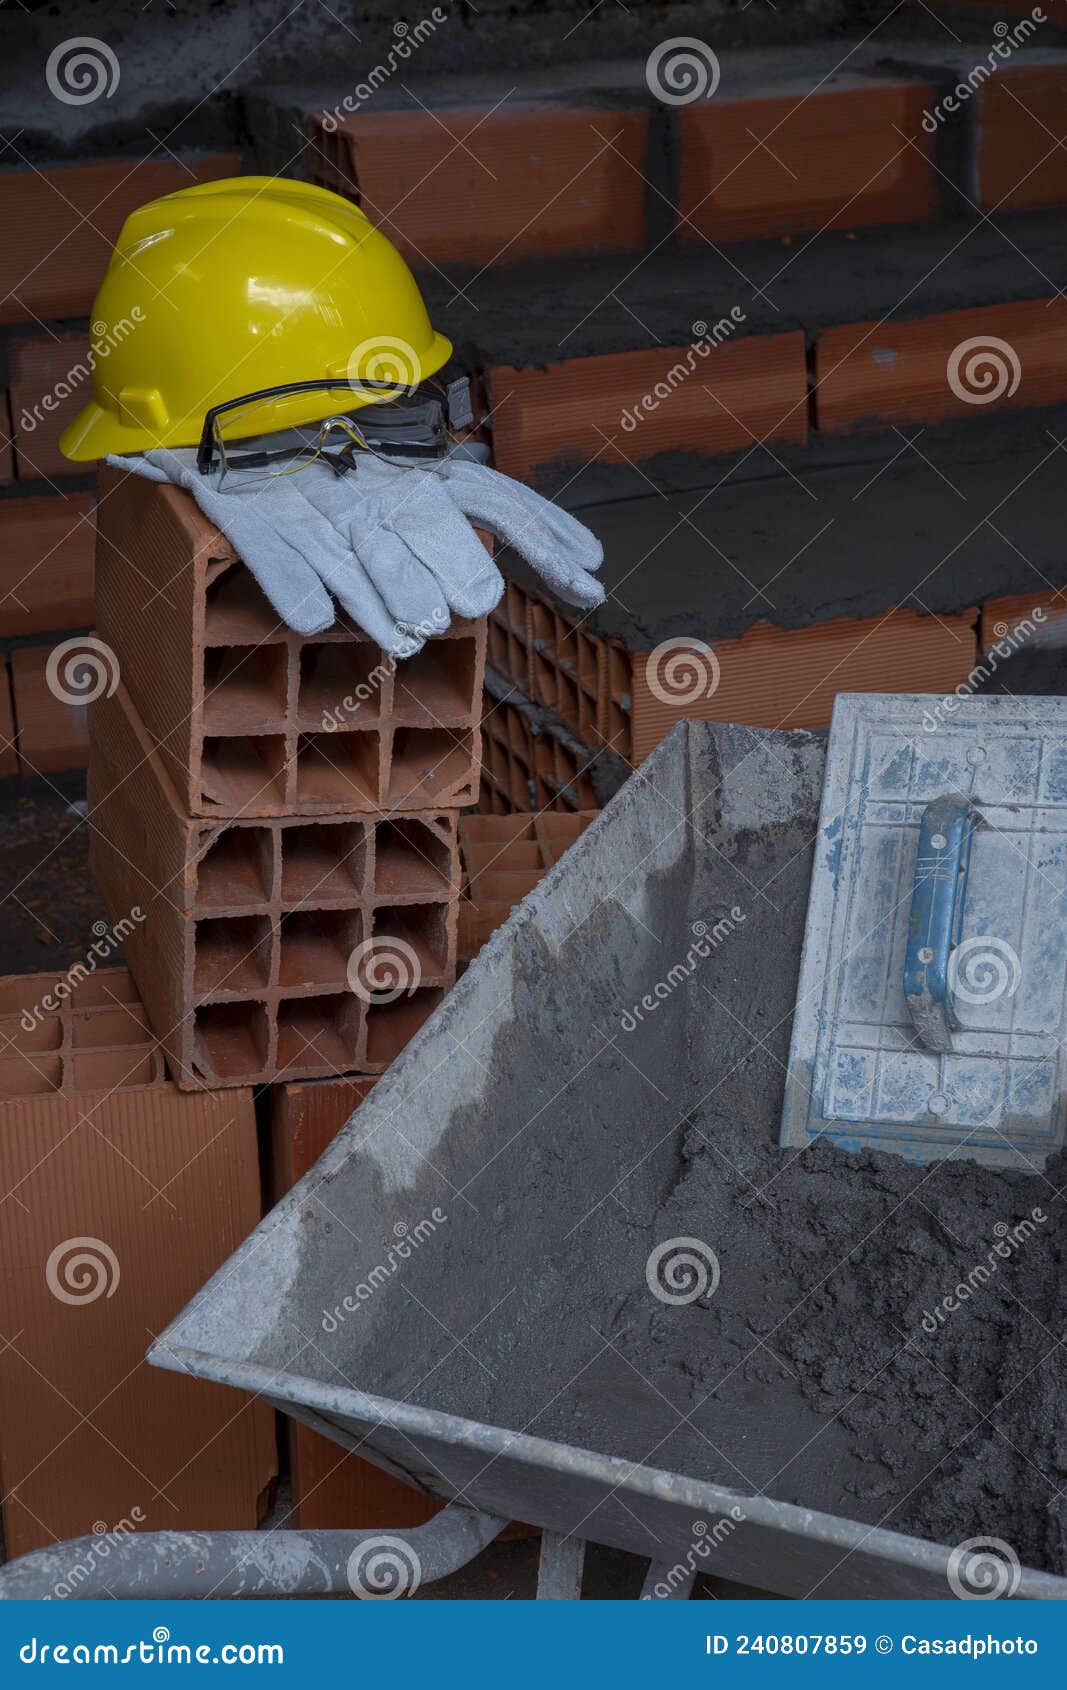 gloves, helmet and goggles on pile of bricks